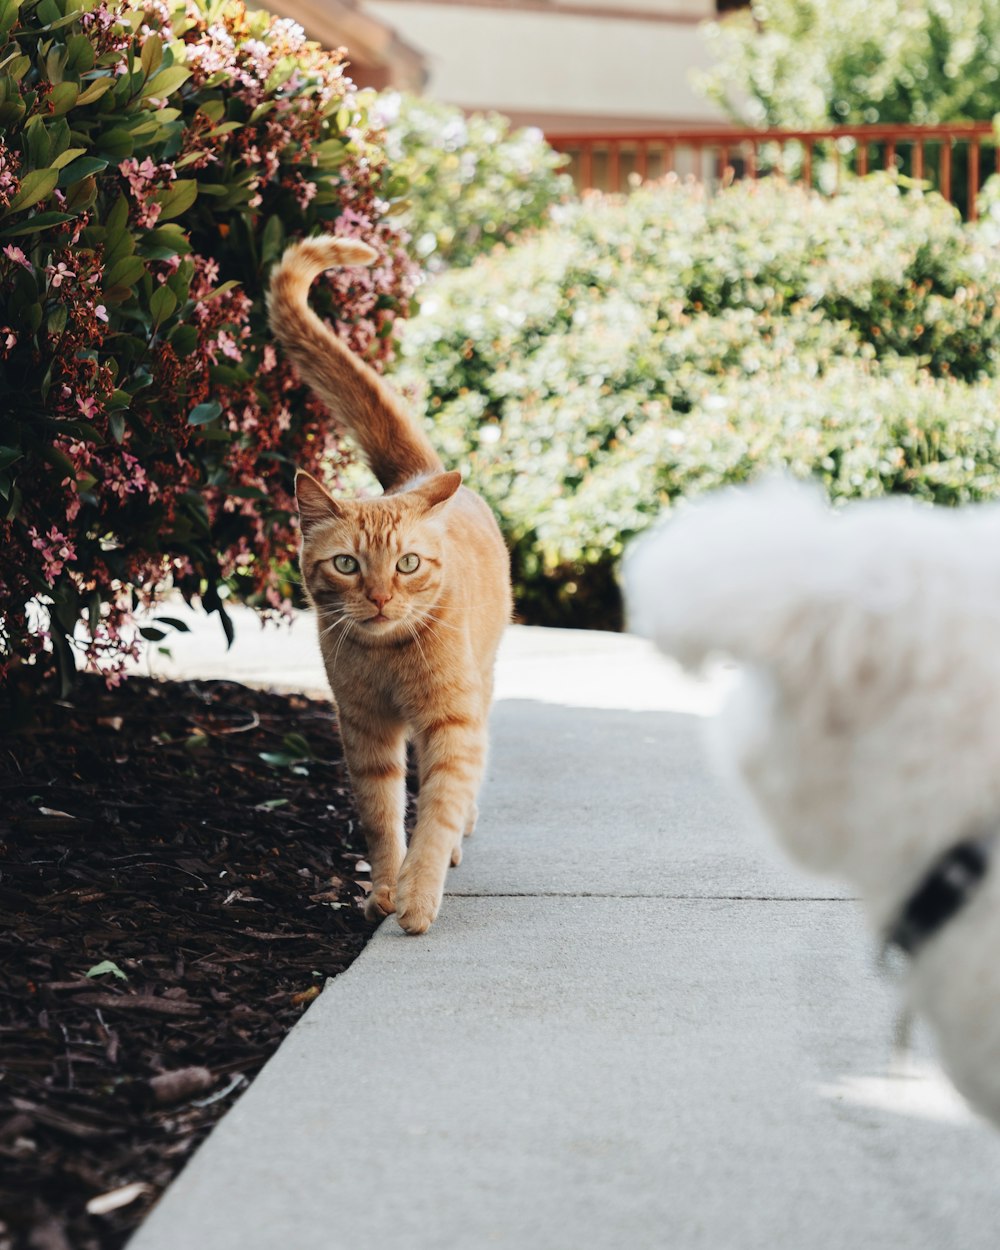 an orange cat walking down a sidewalk next to a white dog